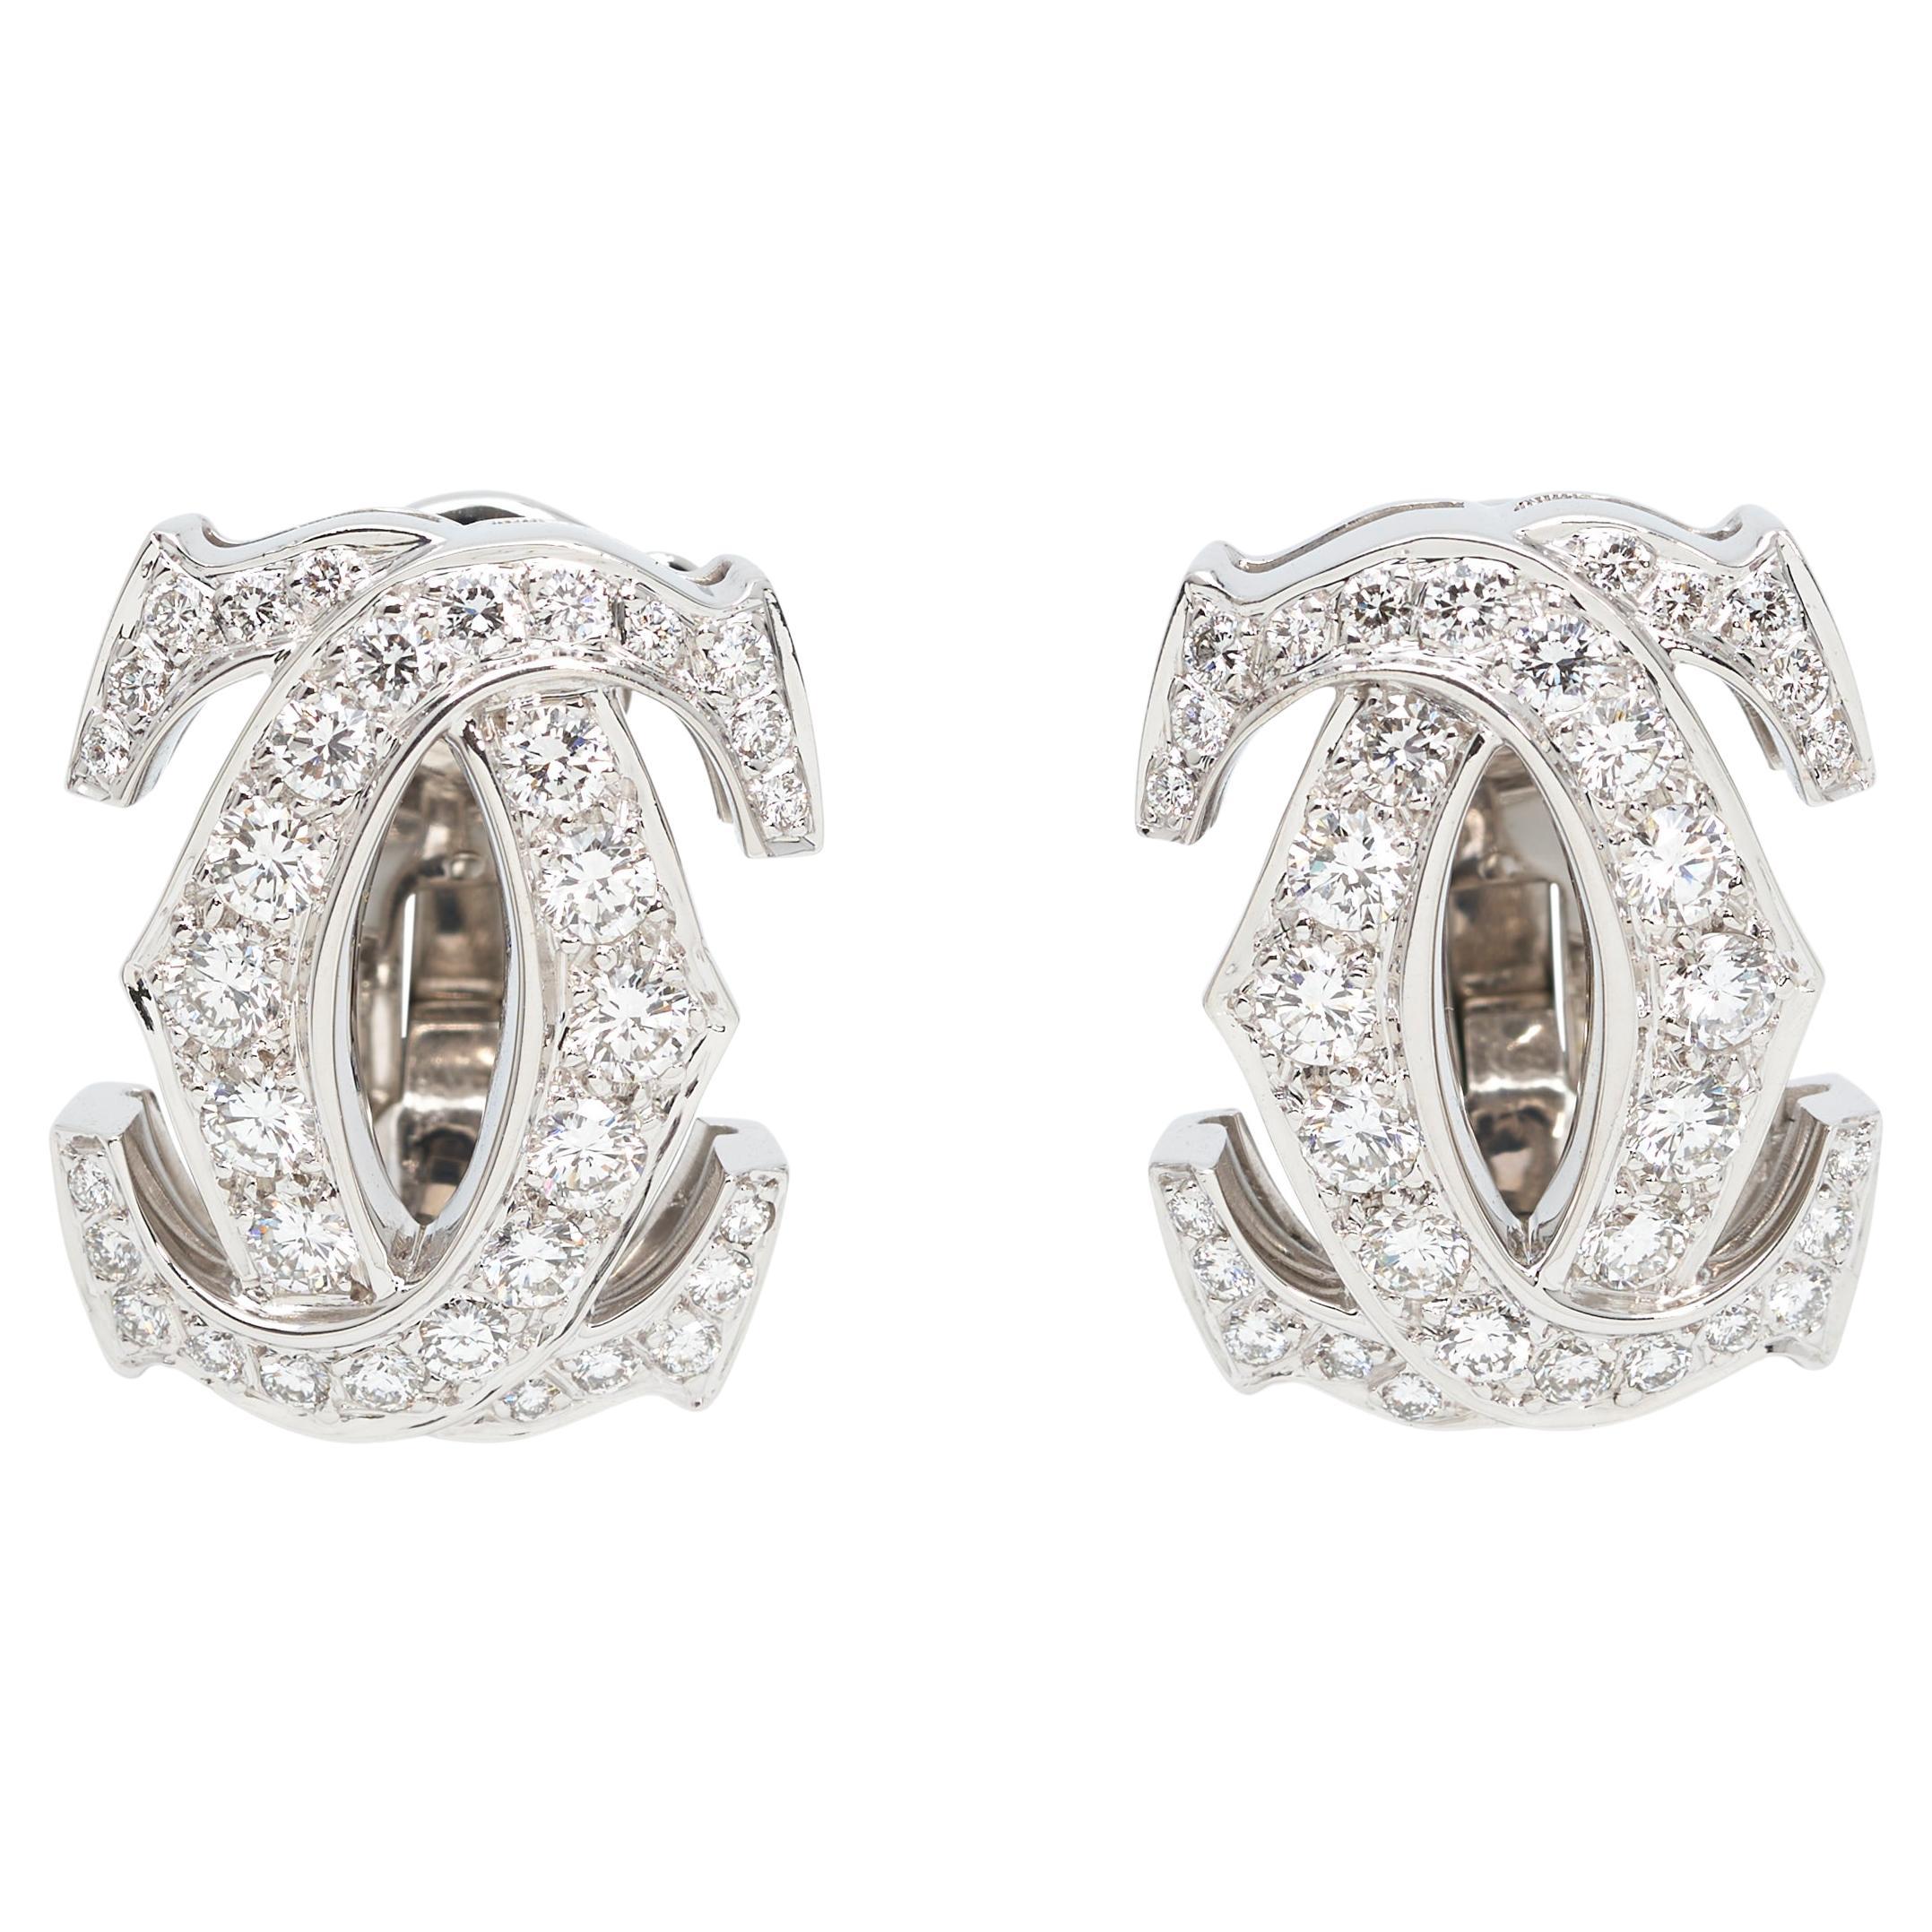 Cartier 'Penelope' White Gold Diamond Large Double C Earrings